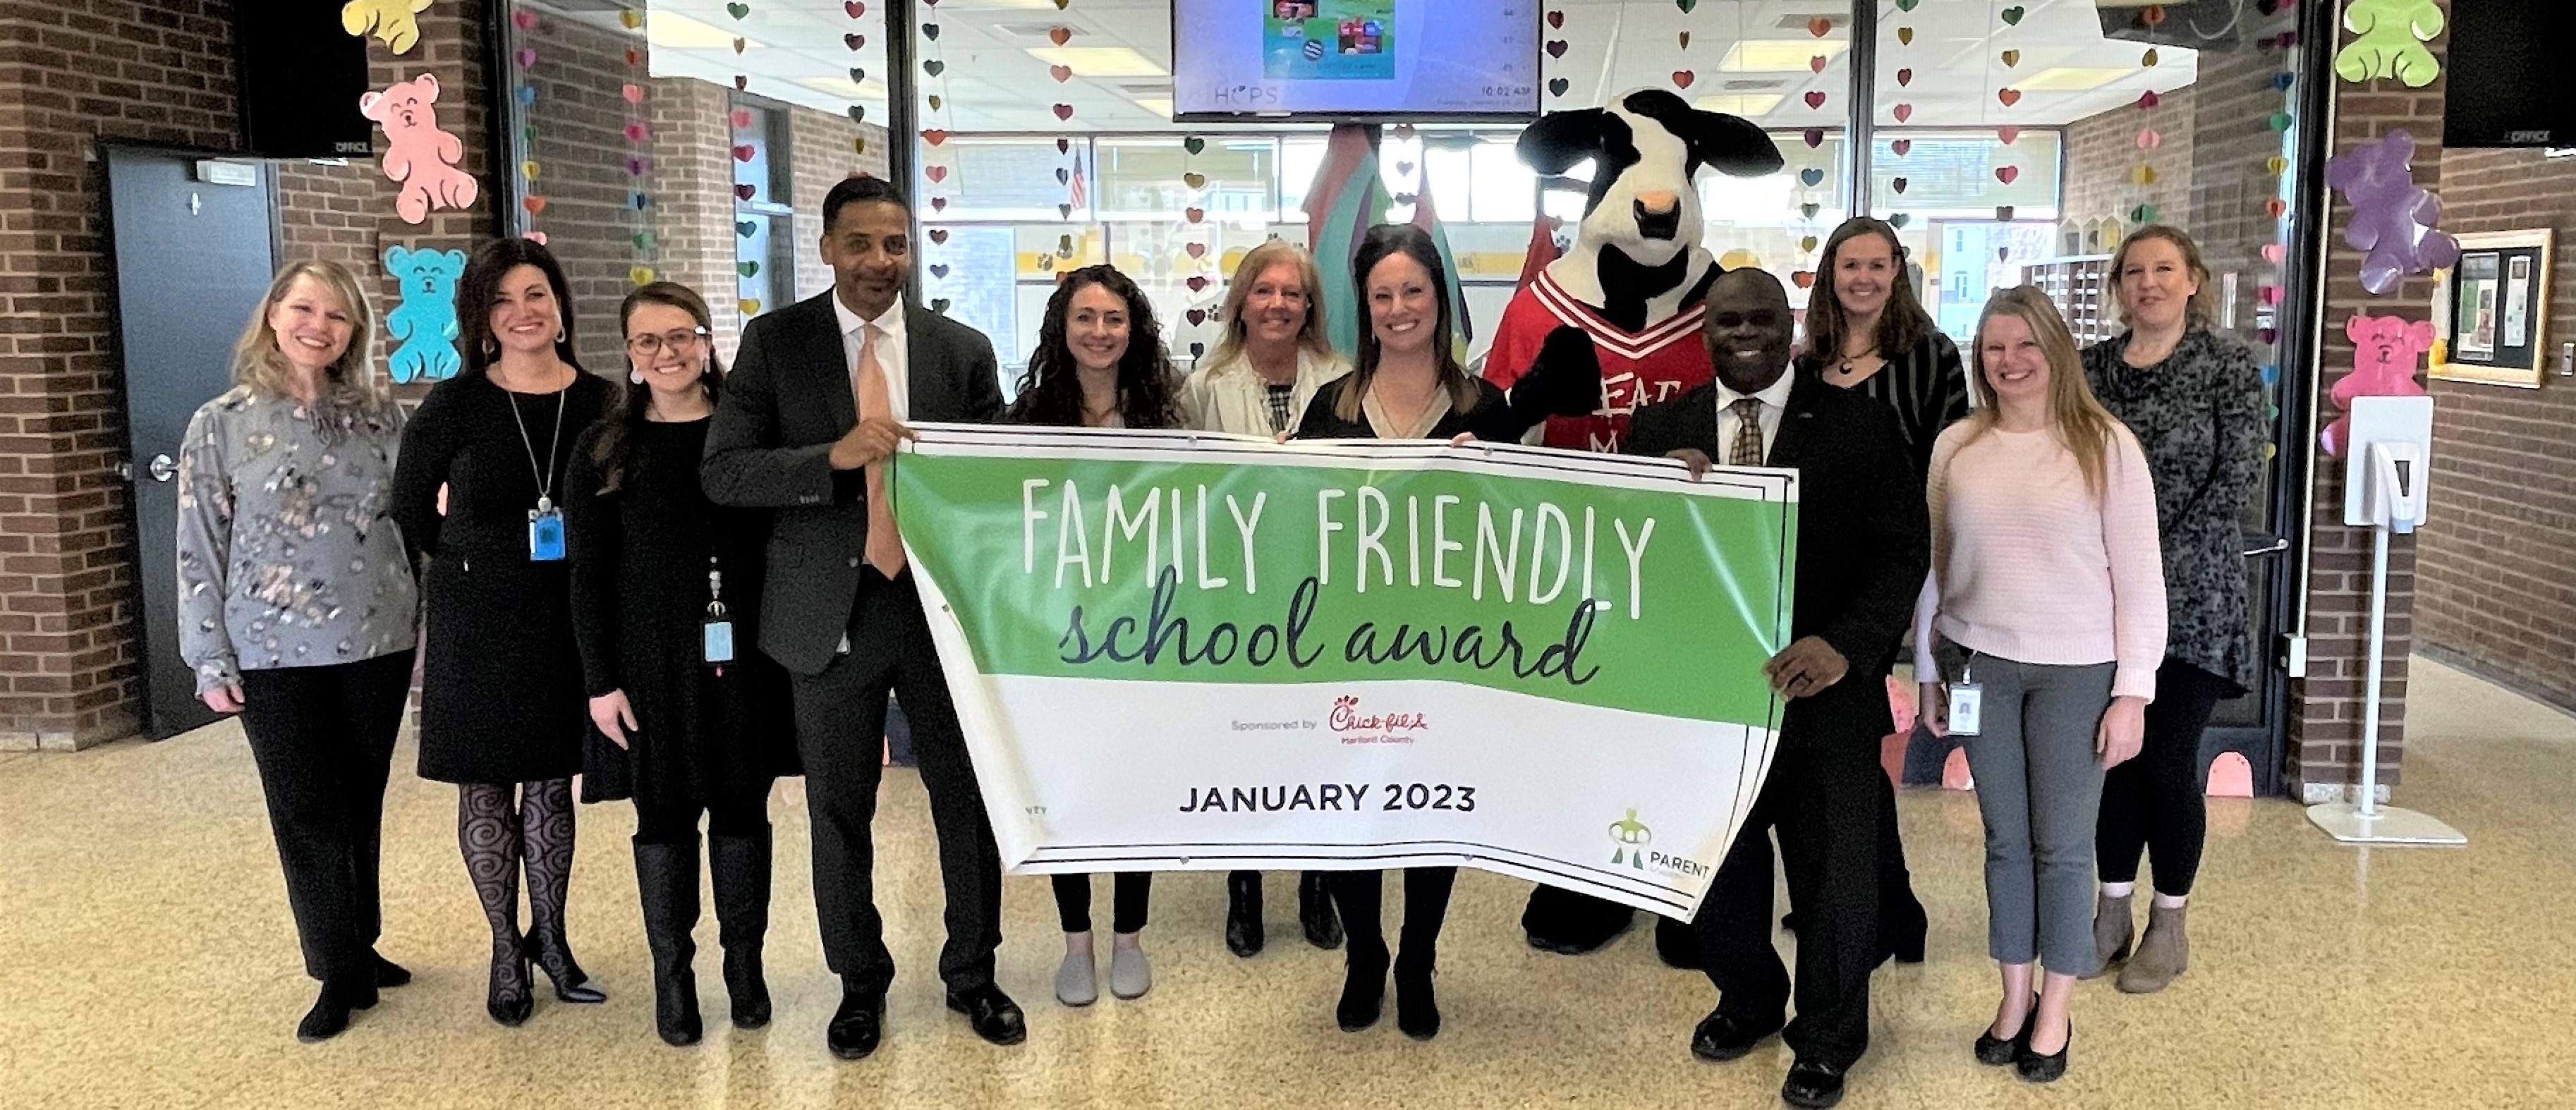 William S. James Elementary School Named January 2023 Family Friendly School!